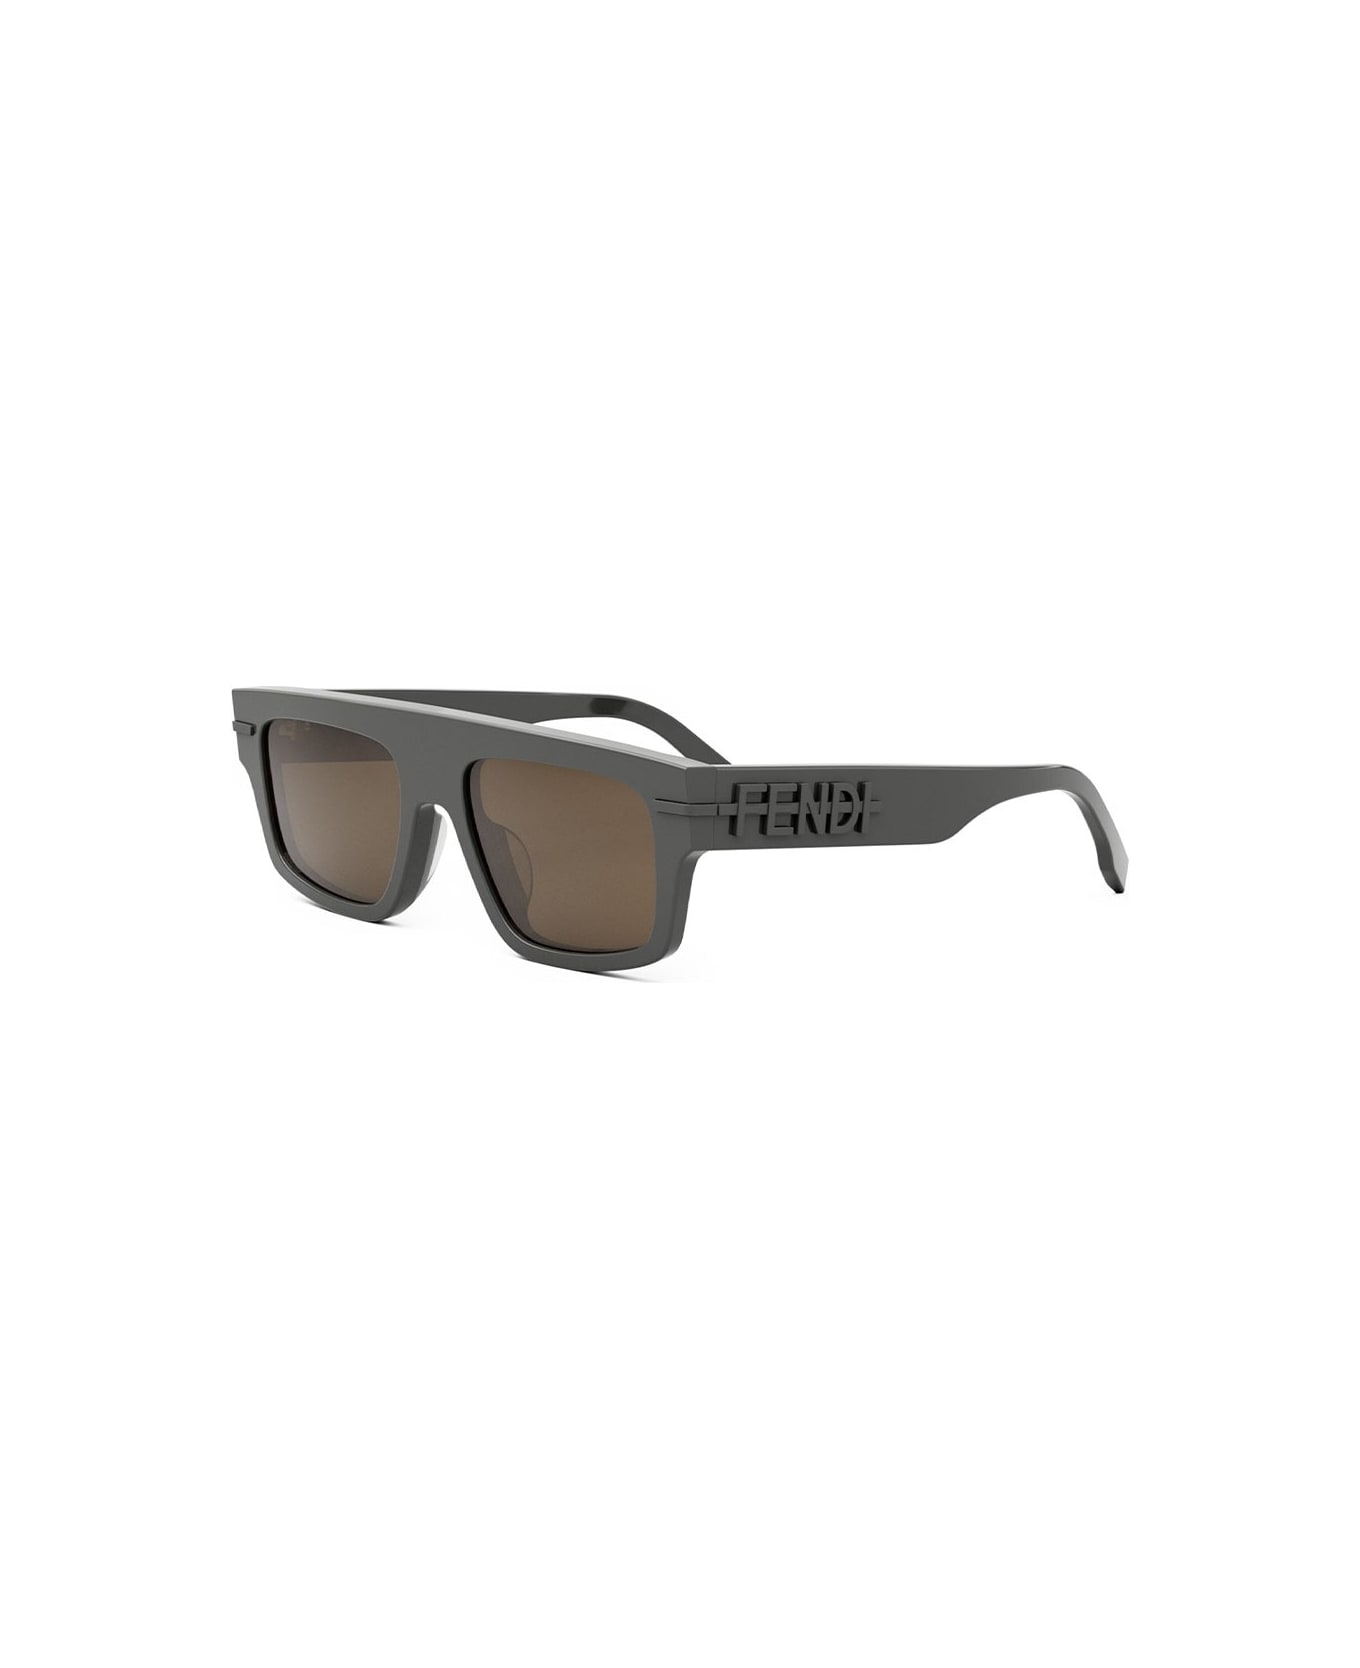 Fendi Eyewear Sunglasses - Grigio/Marrone